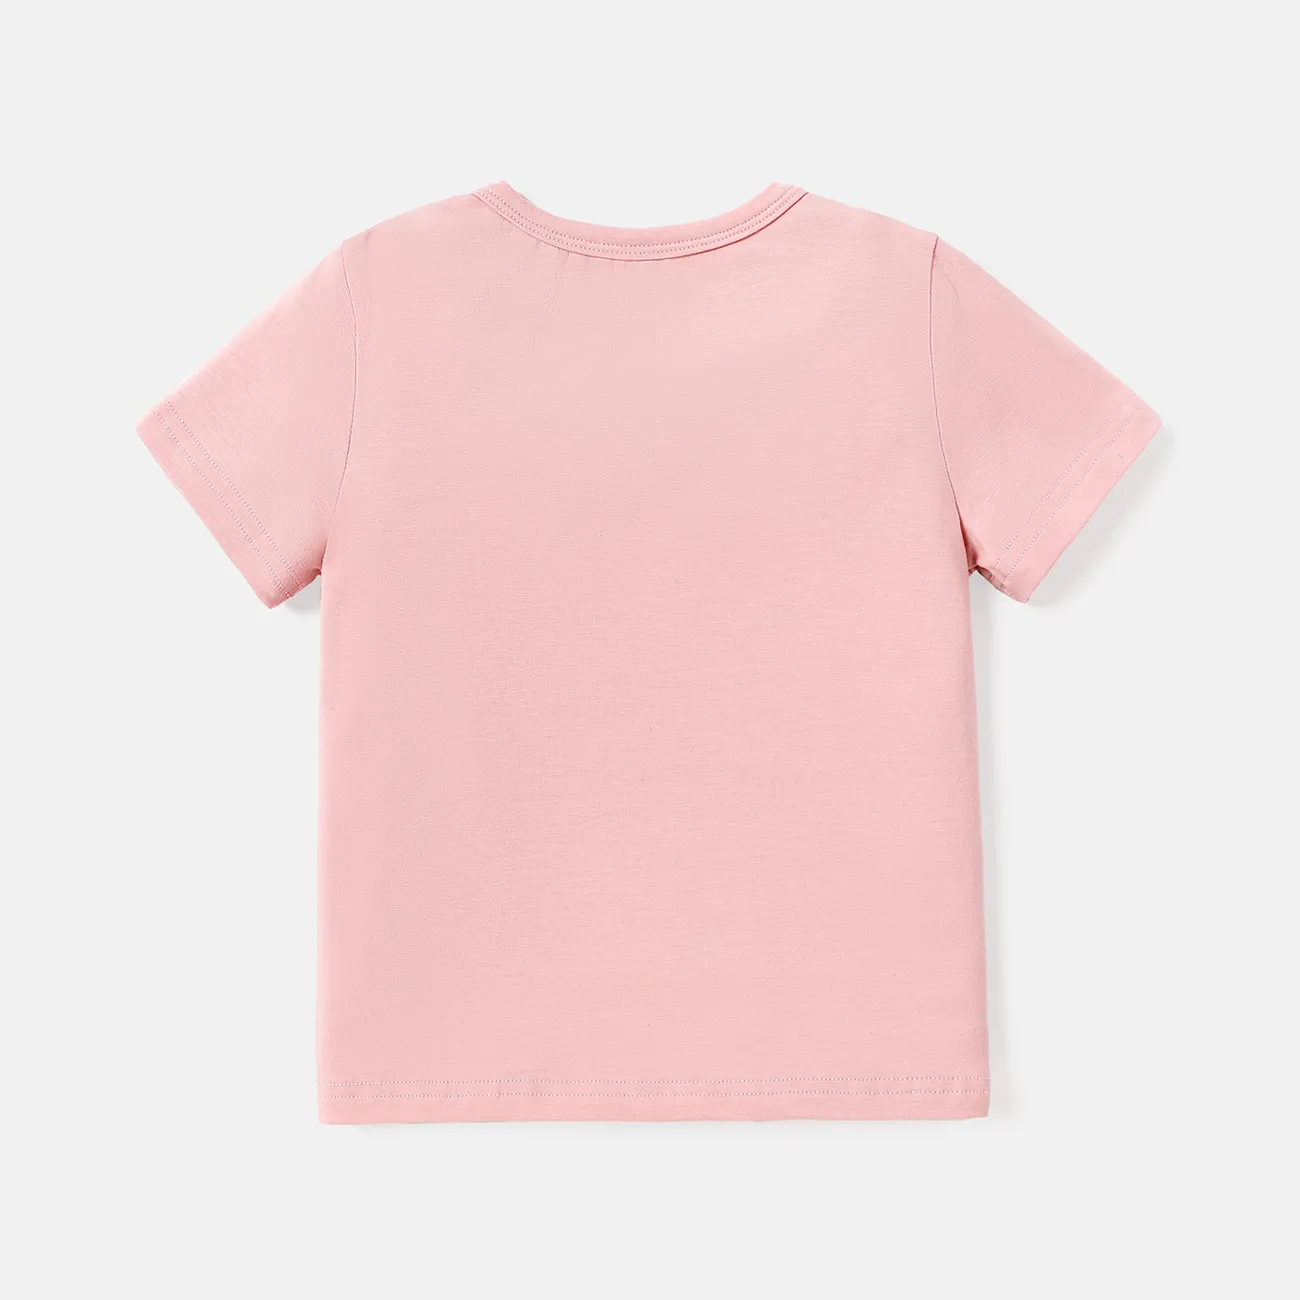 Toddler/Kid Letter Print Short-sleeve Cotton Tee Pink big image 1